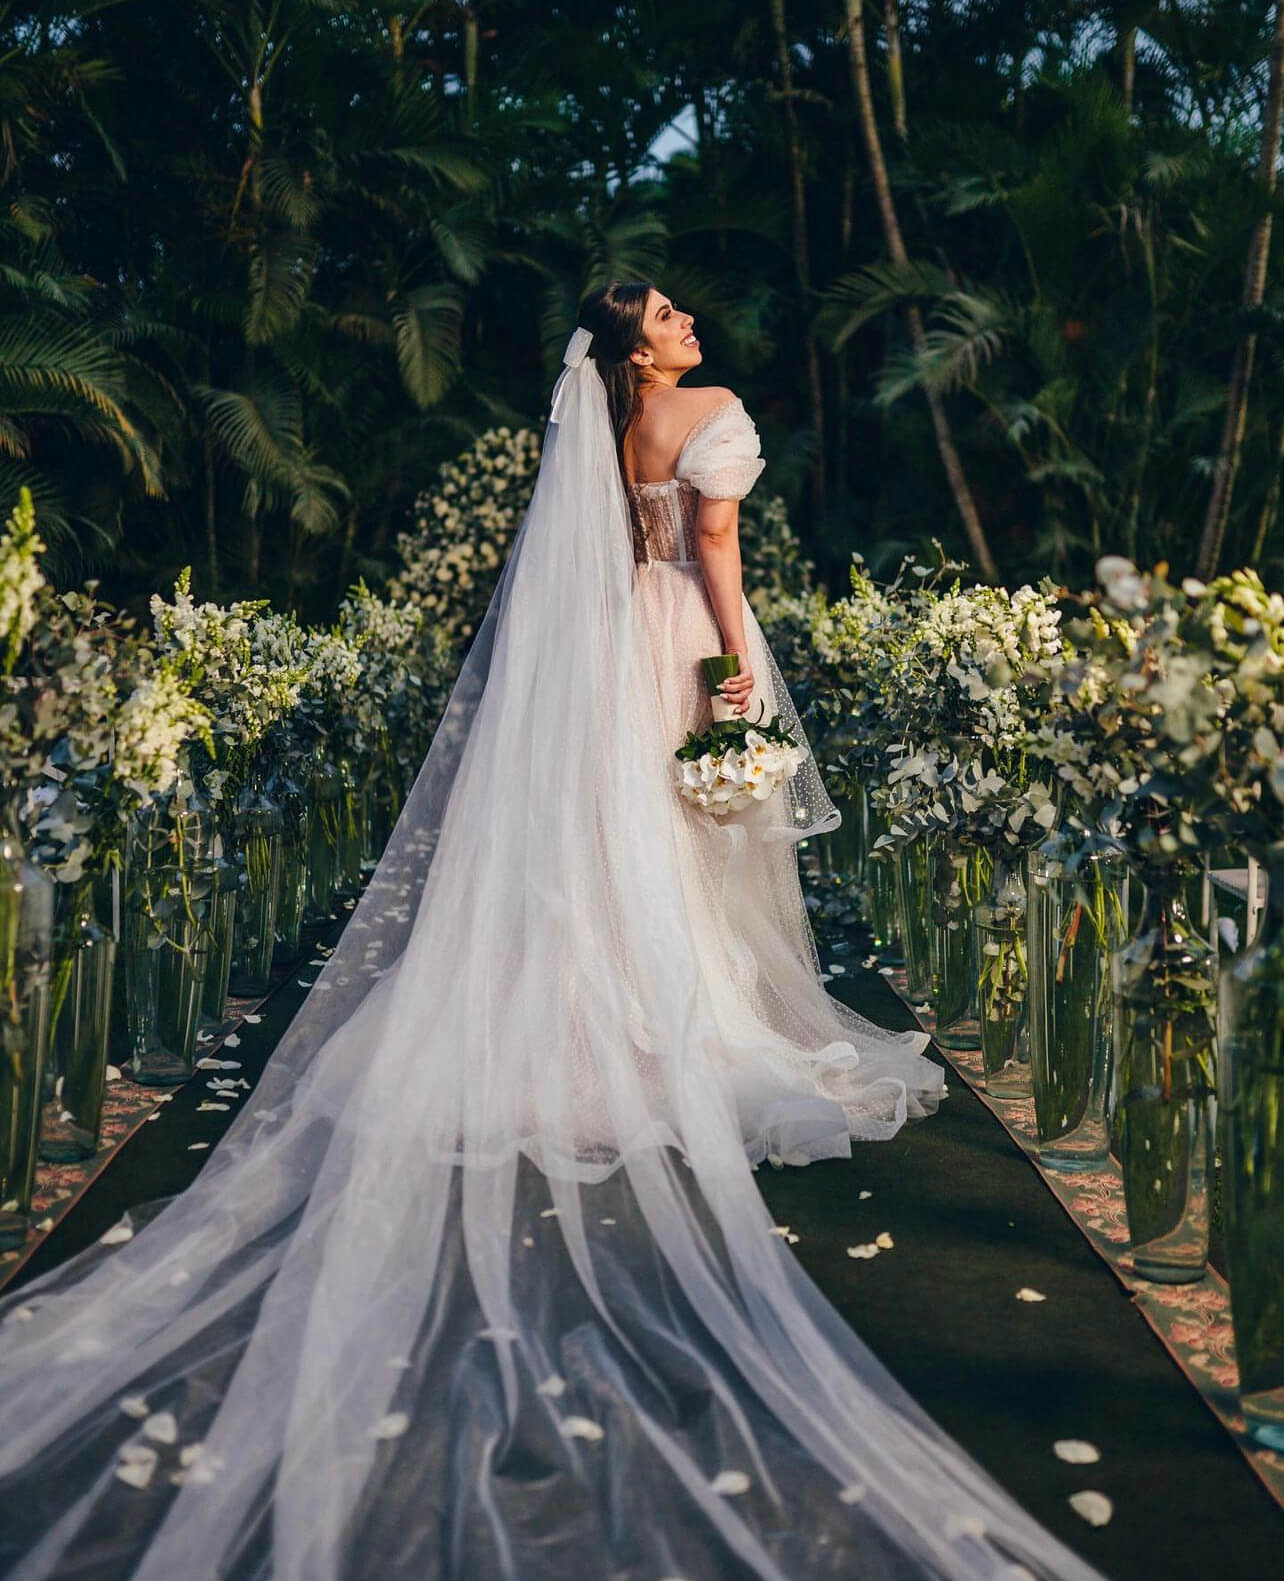 Ateliê Ley Lopes: vestidos de noiva na medida do seu sonho!